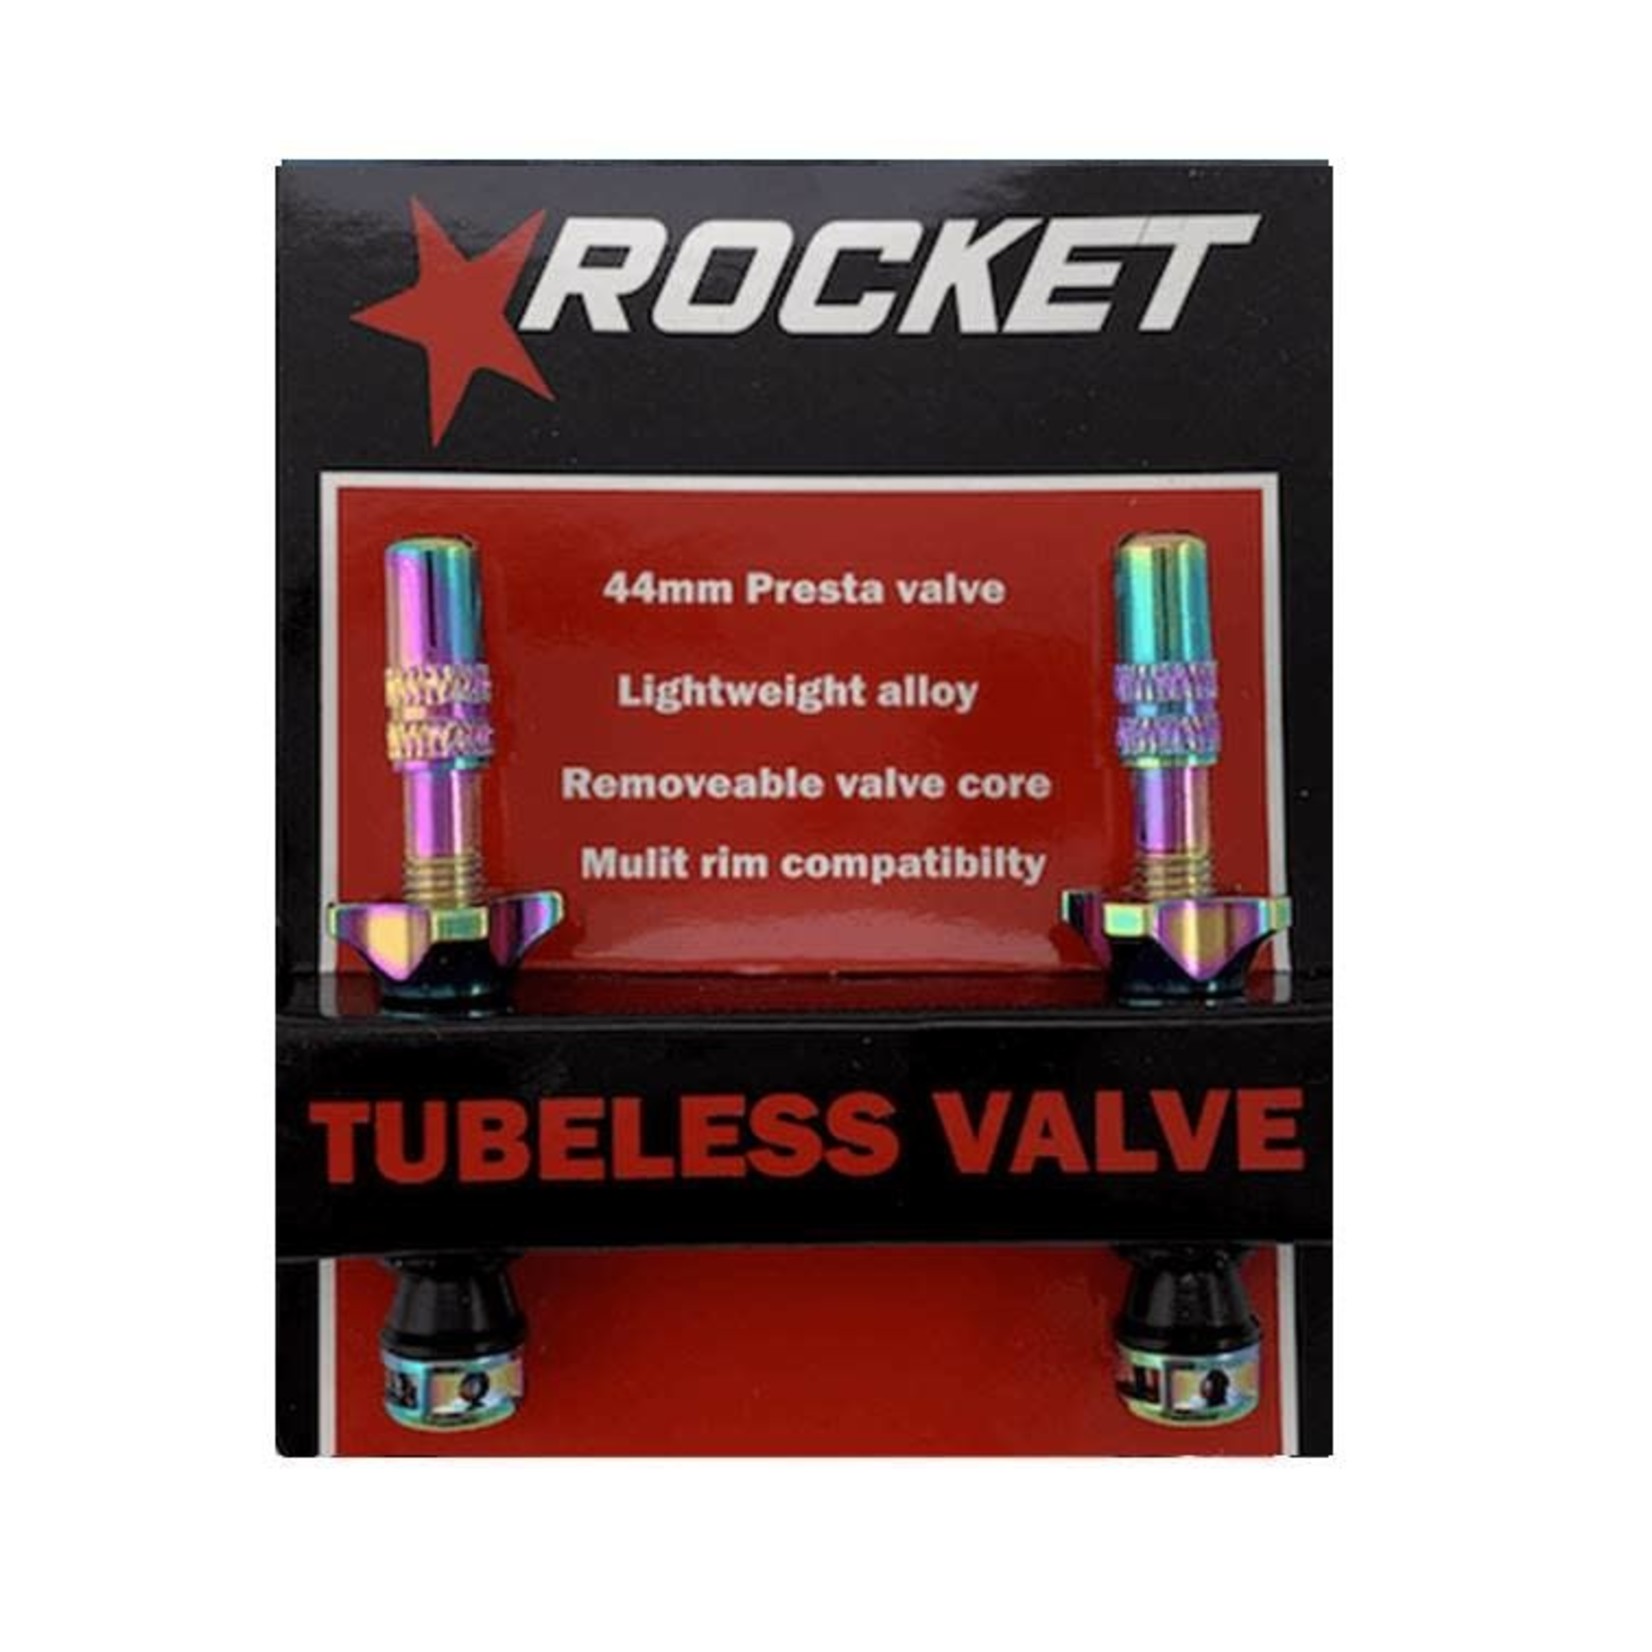 Rocket Tubeless Valve Pair 44mm Alloy Neochrome